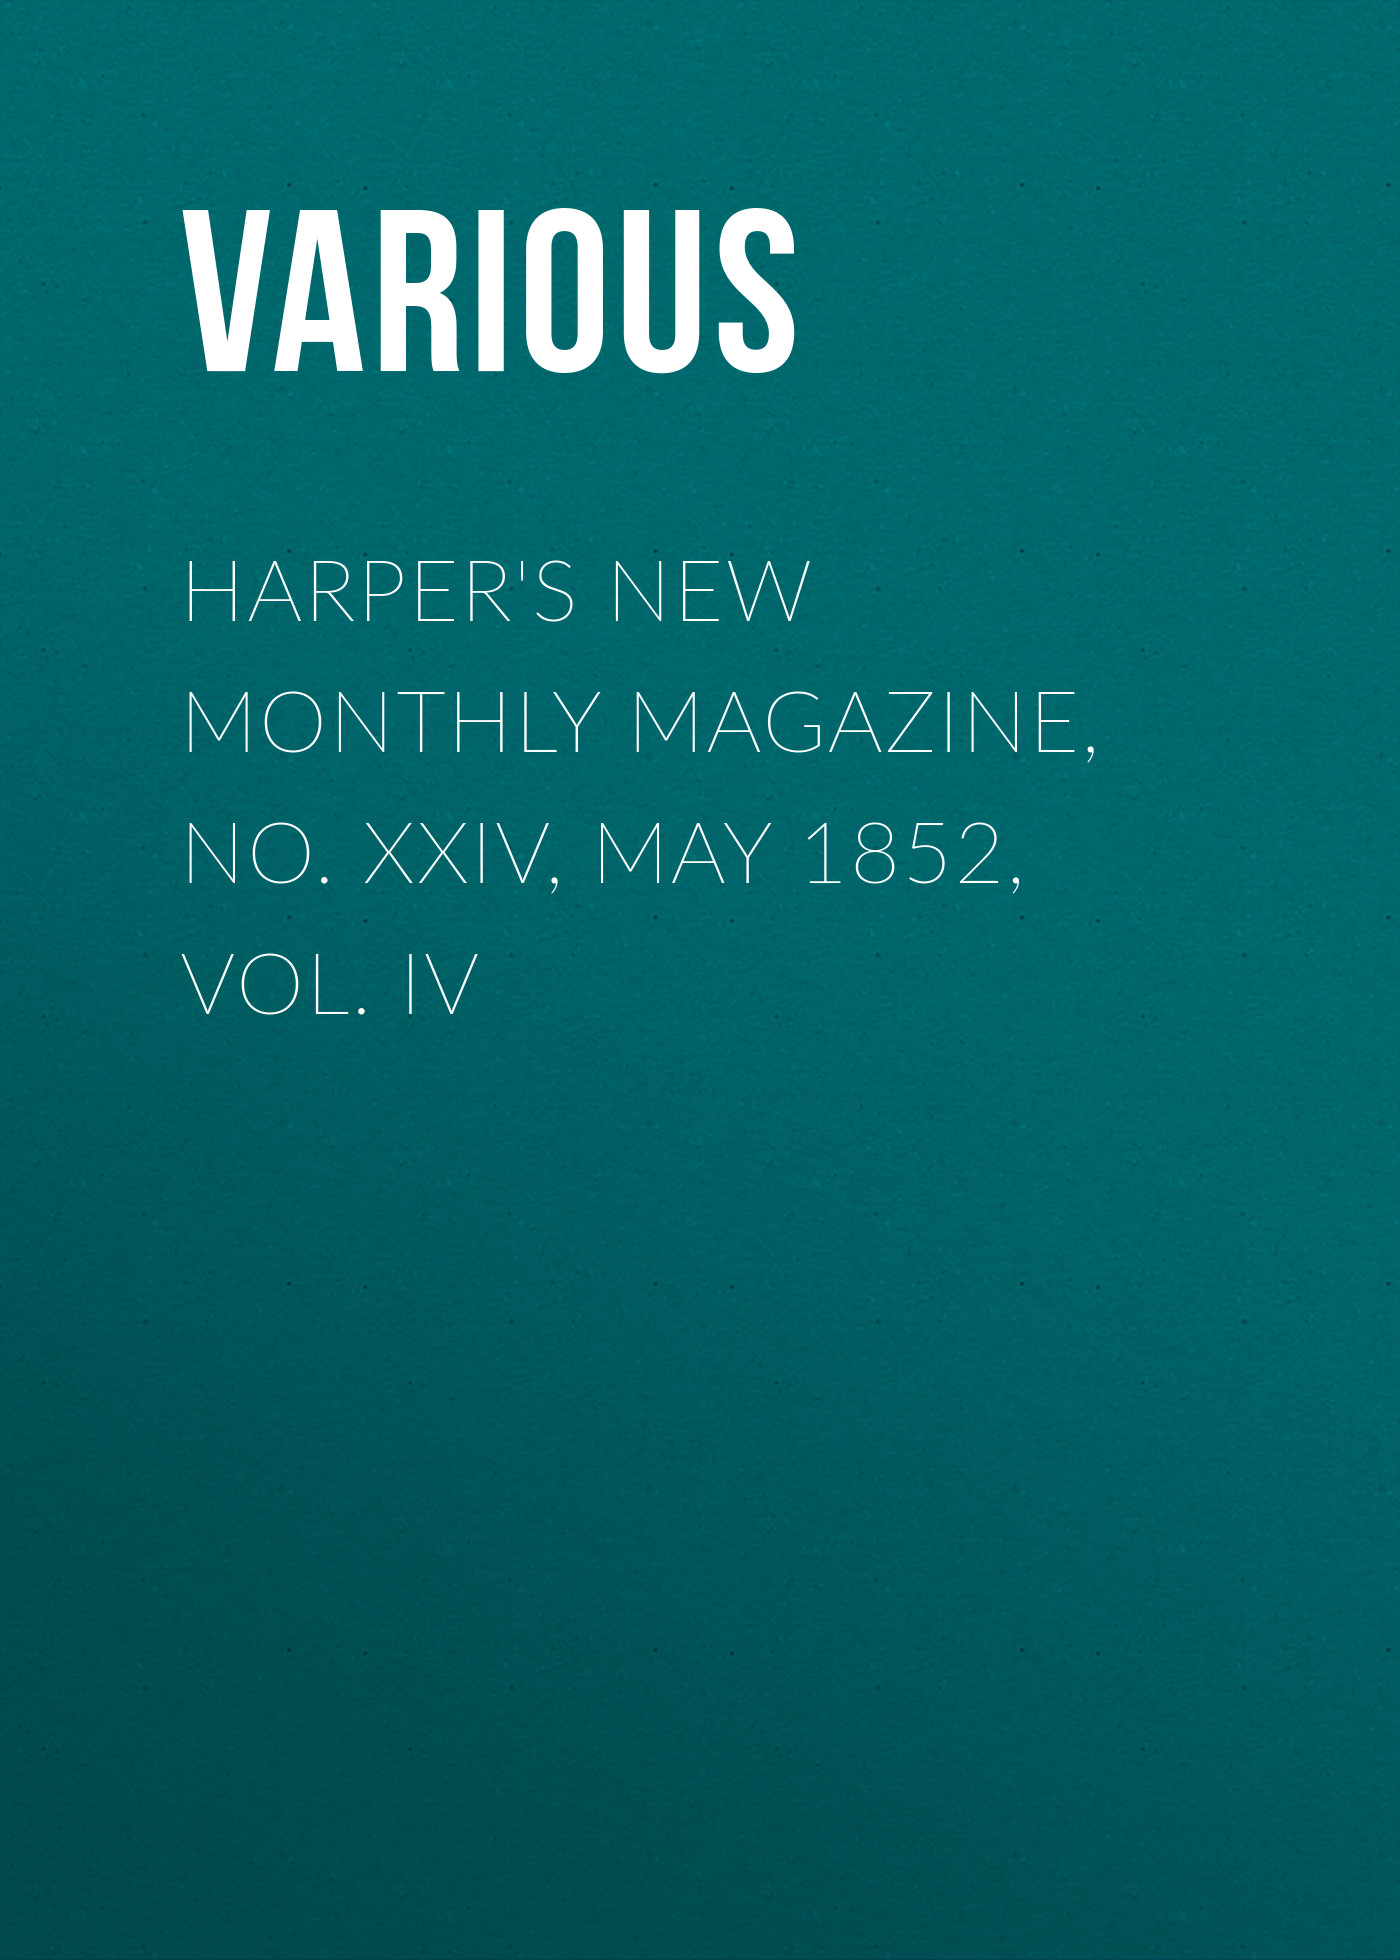 Harper's New Monthly Magazine, No. XXIV, May 1852, Vol. IV